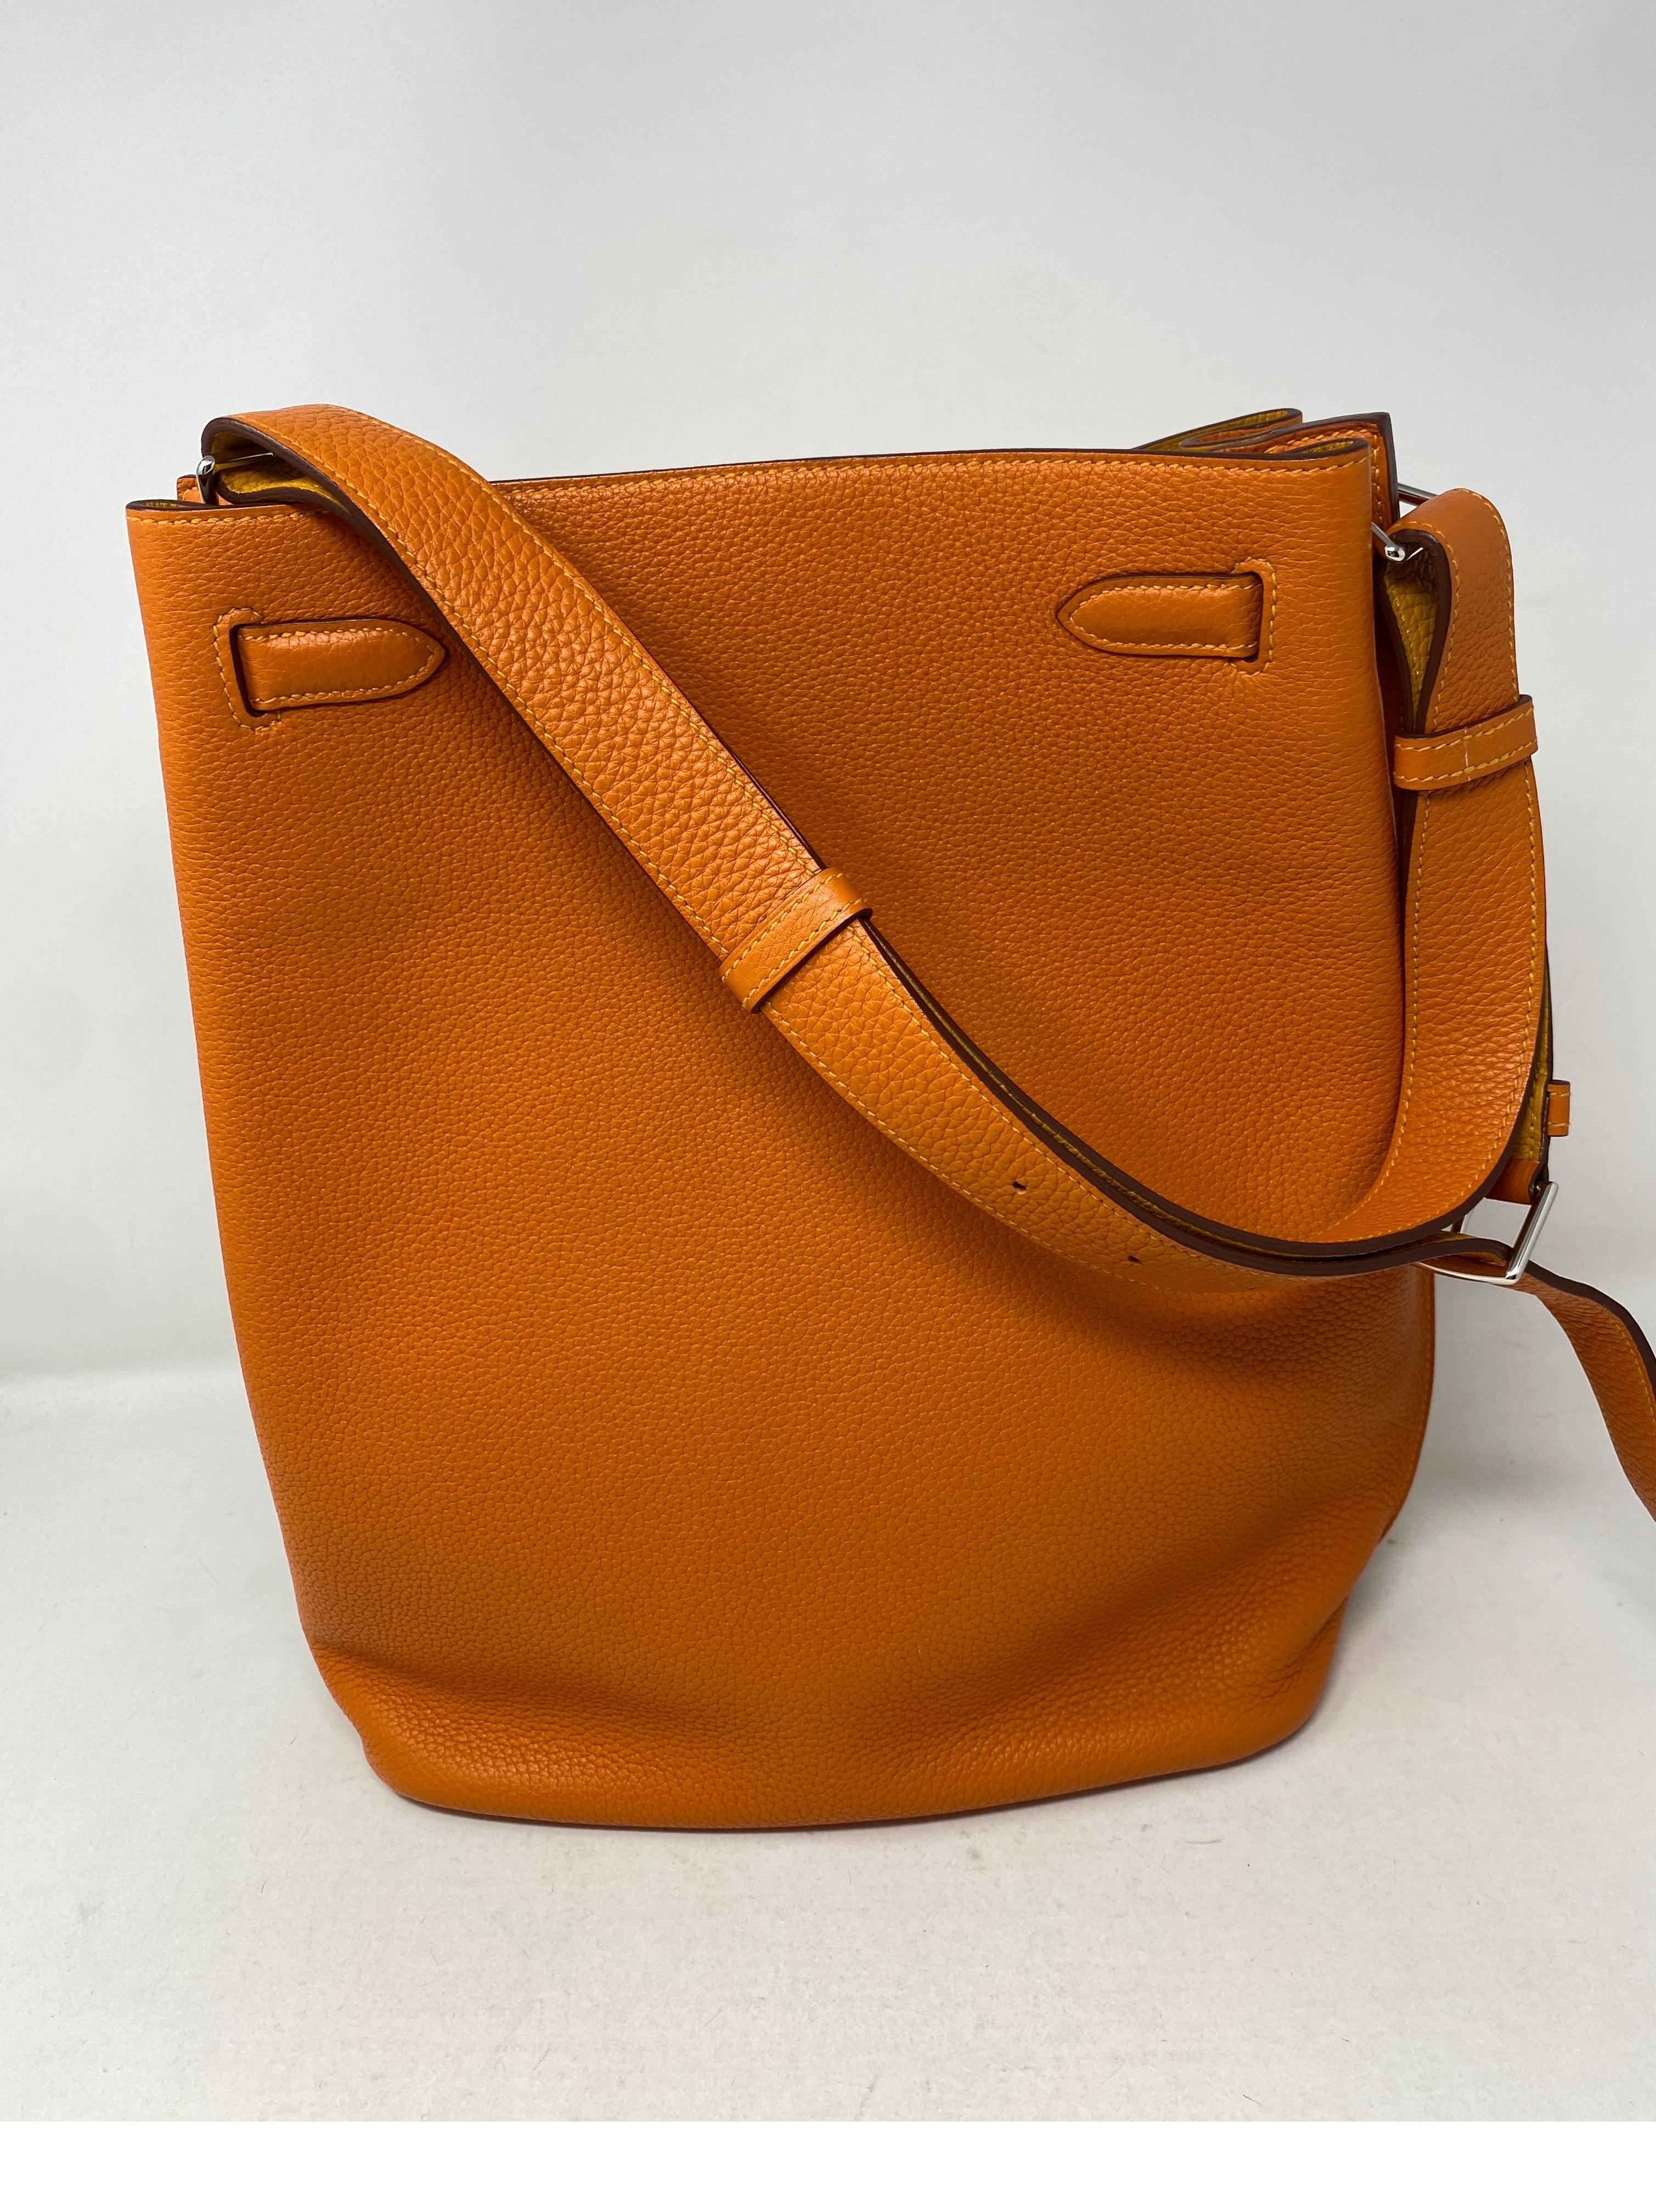 Hermes So Kelly Orange Candy Bag  2